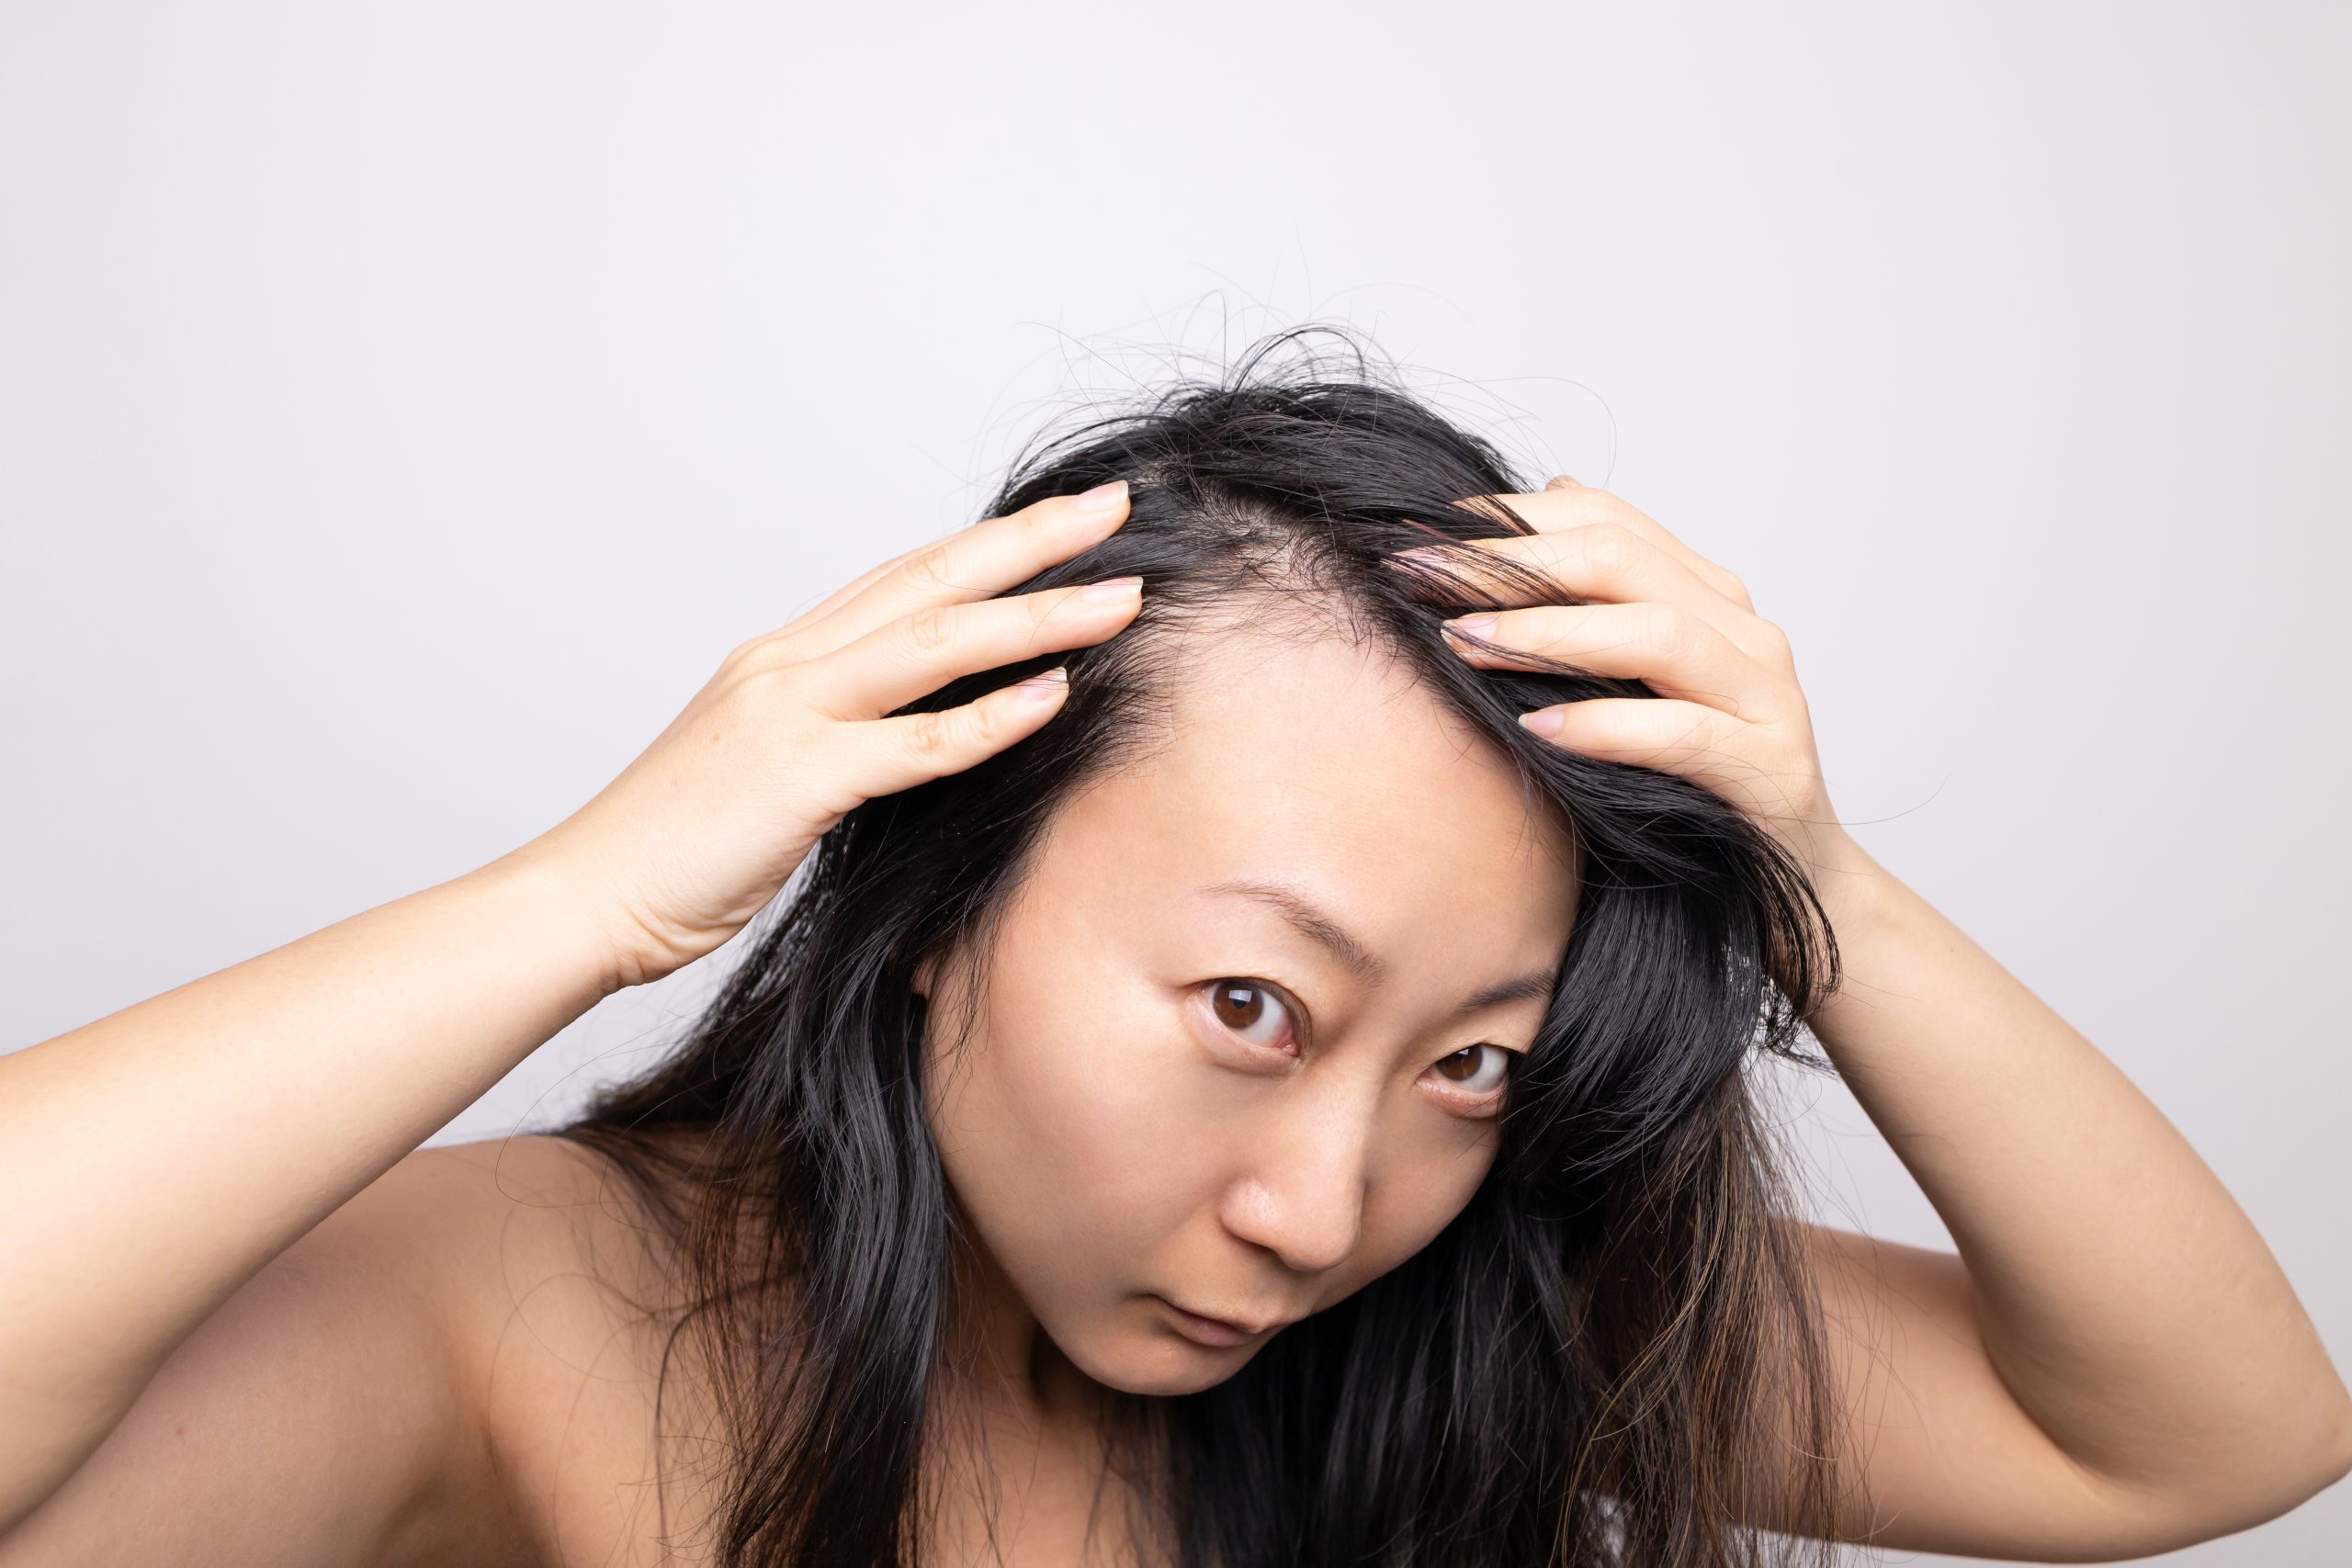 asian woman serious hair loss problem for health c 2023 02 02 01 22 31 utc